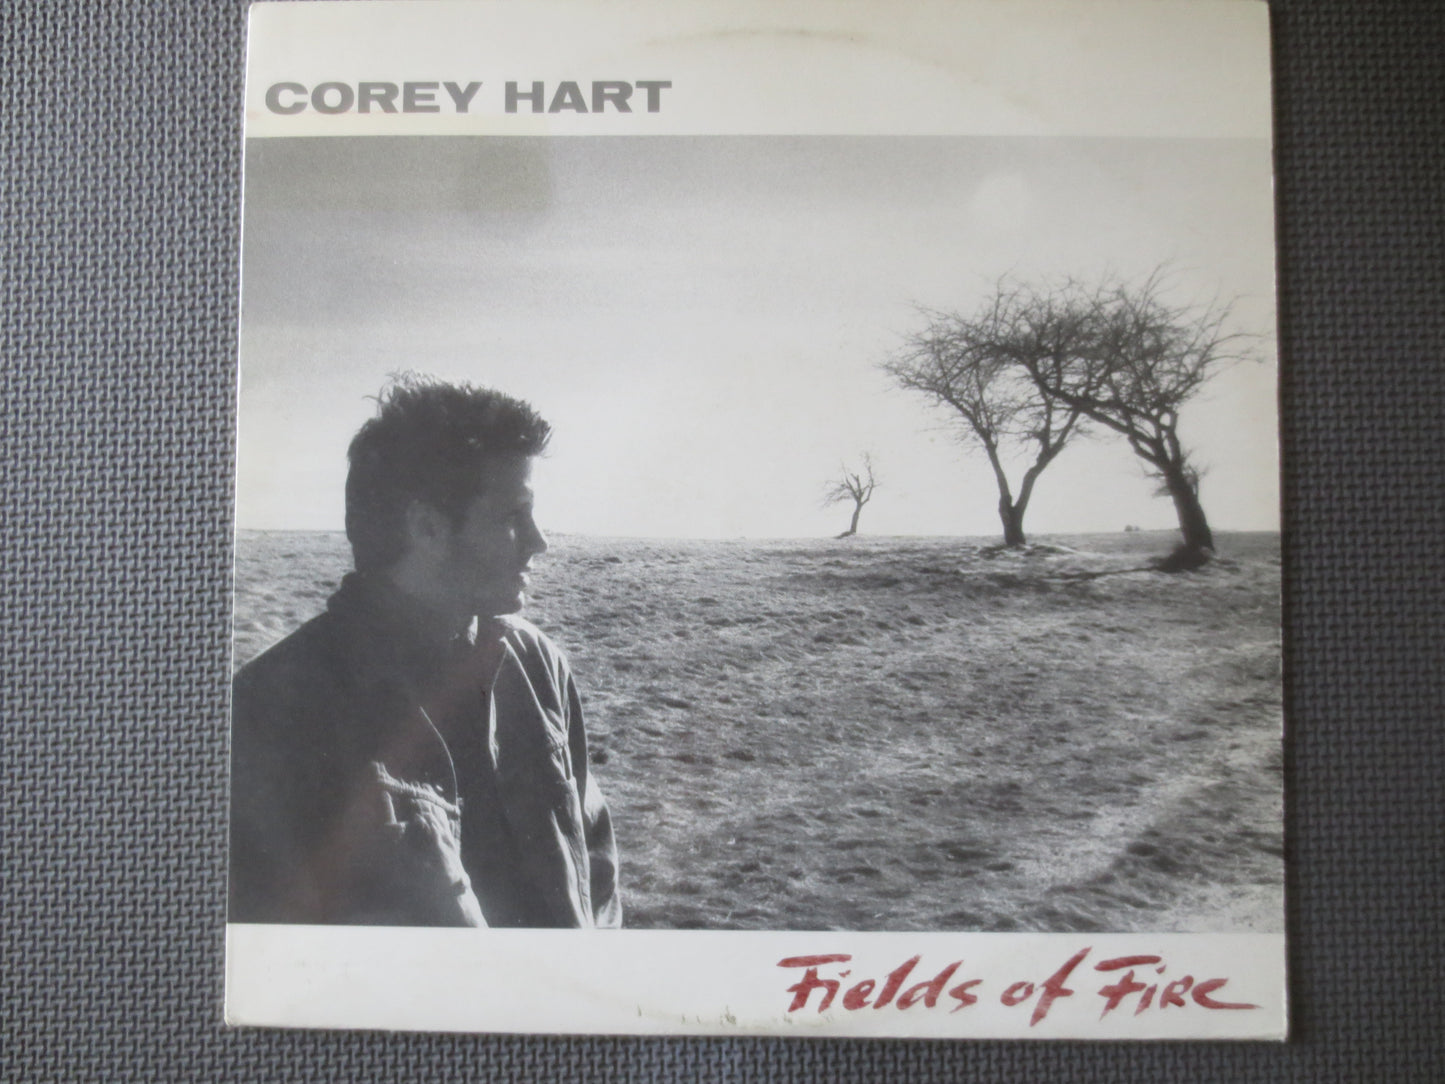 COREY HART, Fields of FIRE, Corey Hart Records, Corey Hart Albums, Vintage Vinyl, Rock Albums, Vinyl Records, 1986 Records